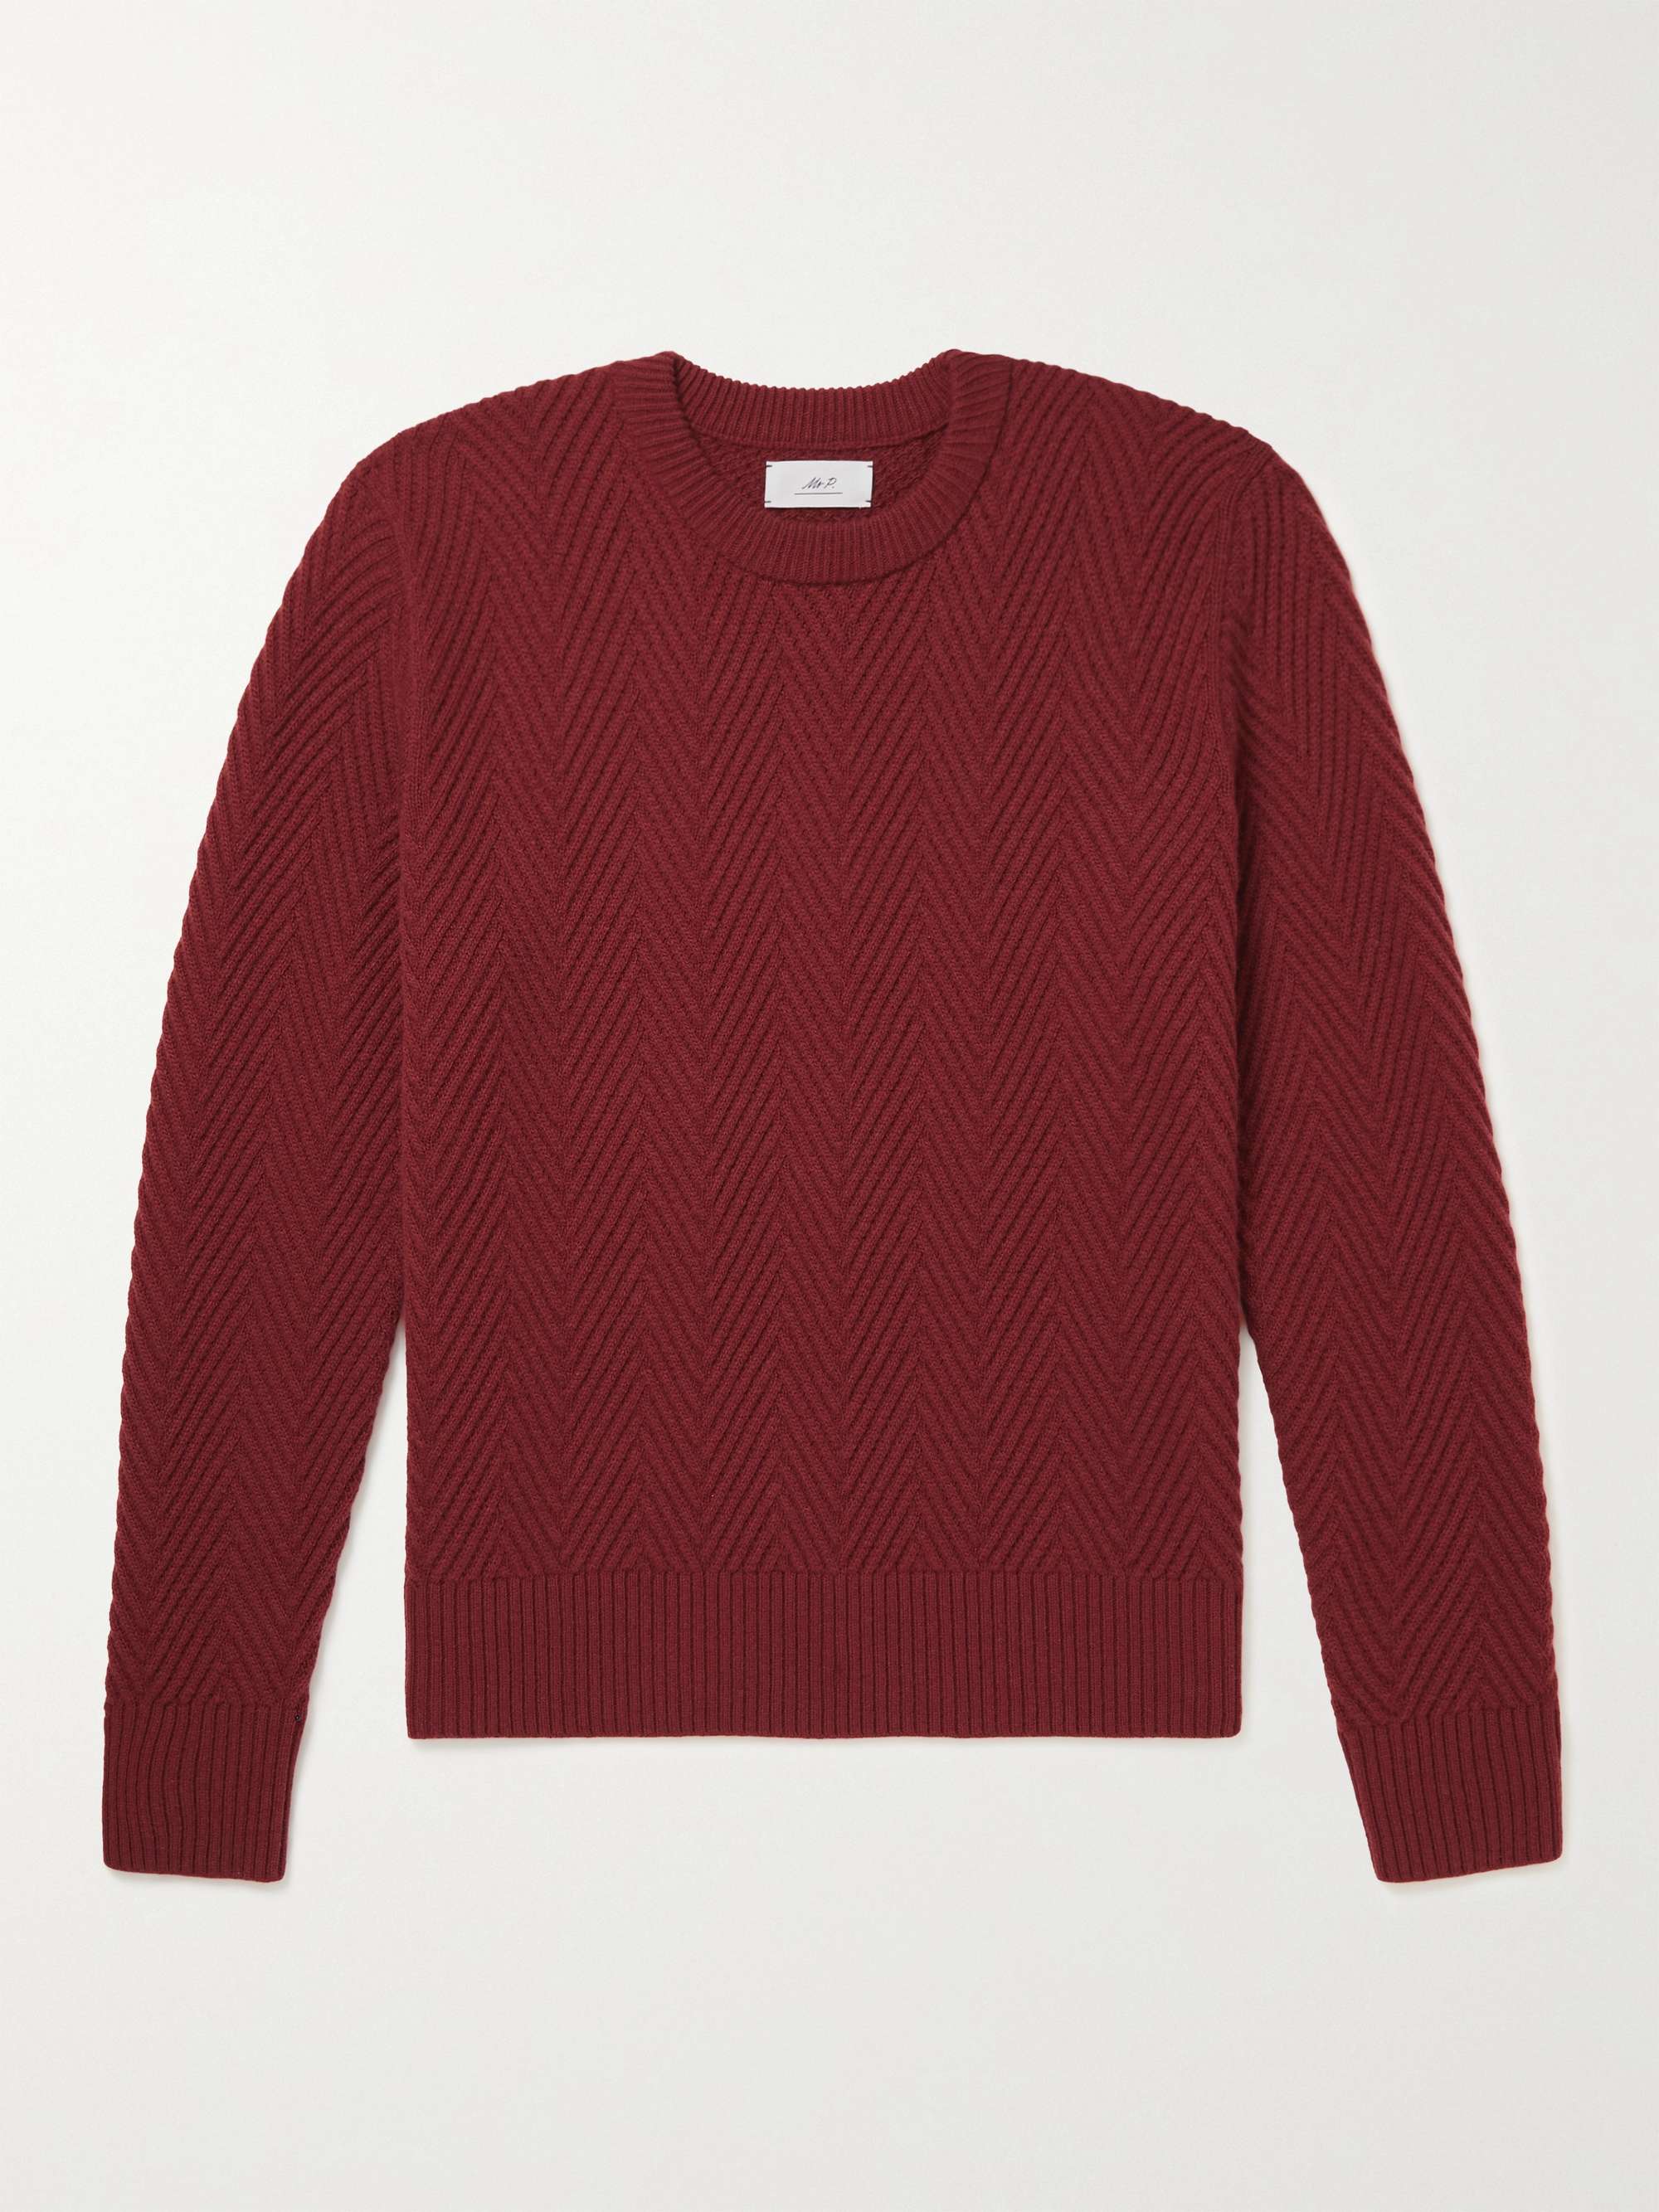 MR P. Herringbone Merino Wool Sweater for Men | MR PORTER